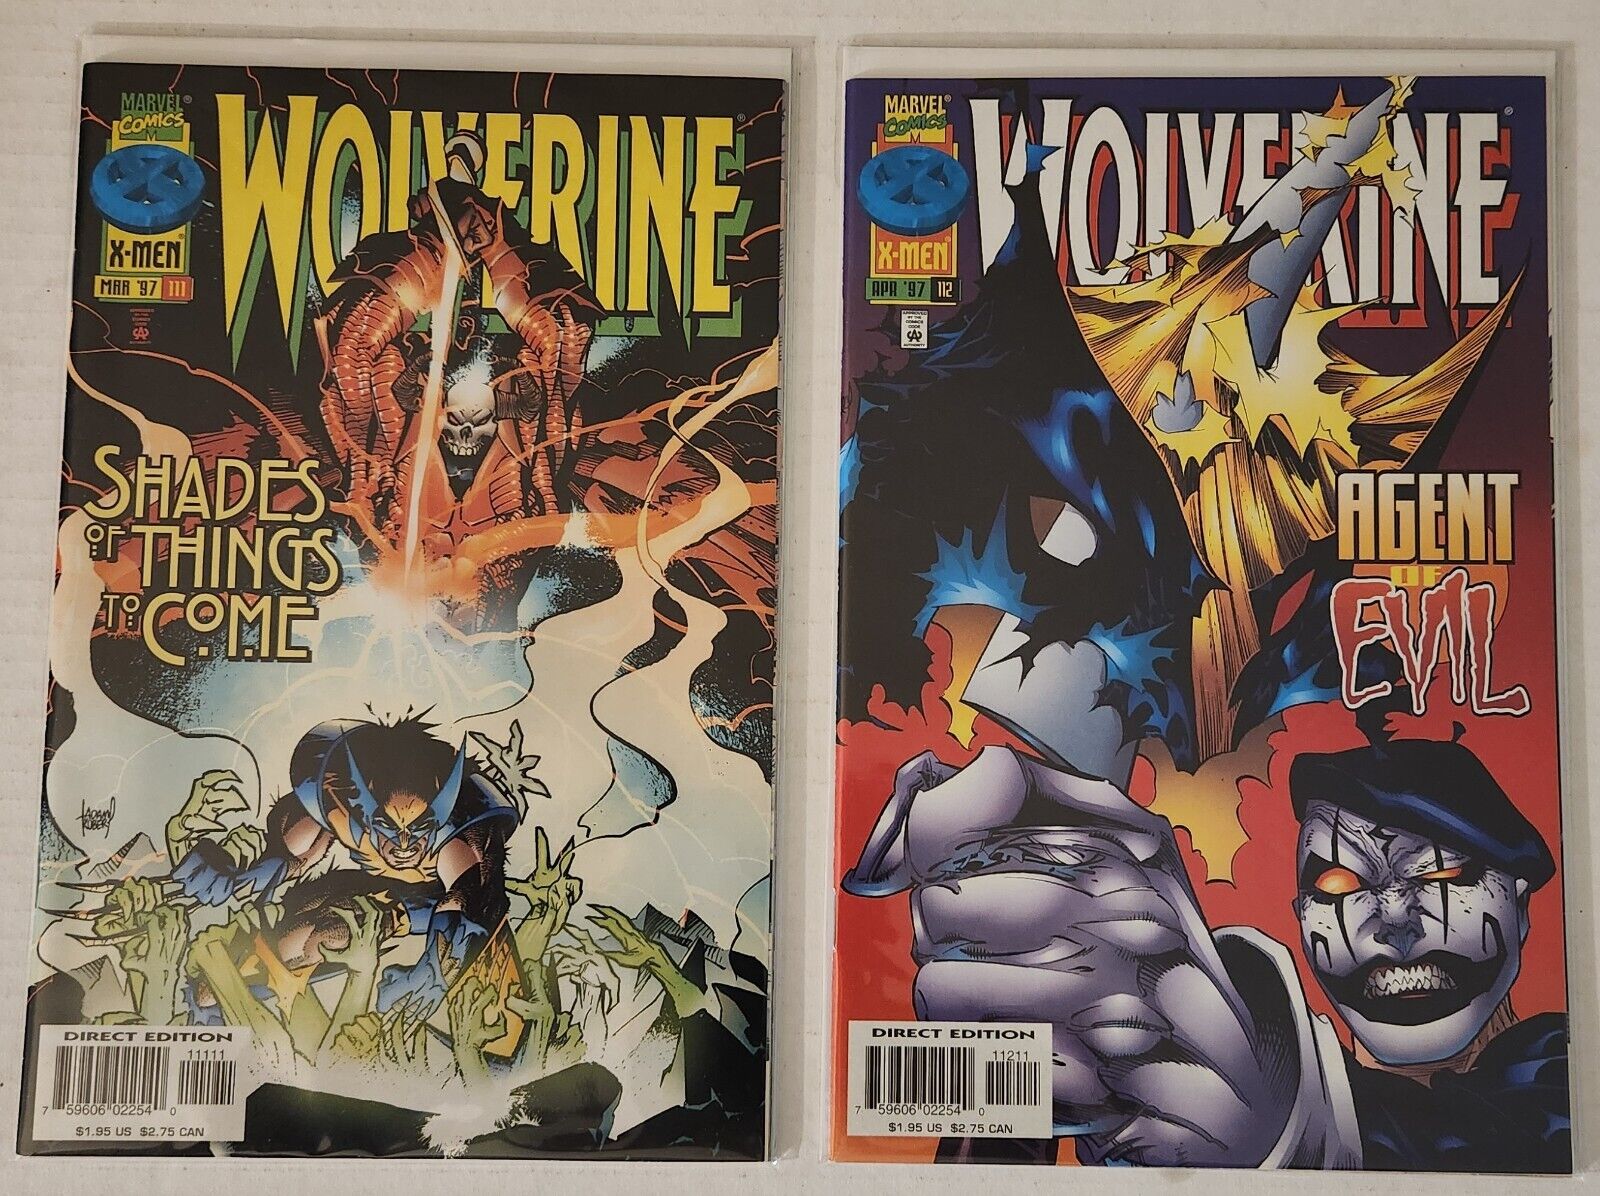 Wolverine (vol. 2) #111-120 (Marvel Comics 1997-1998) 10 issue run